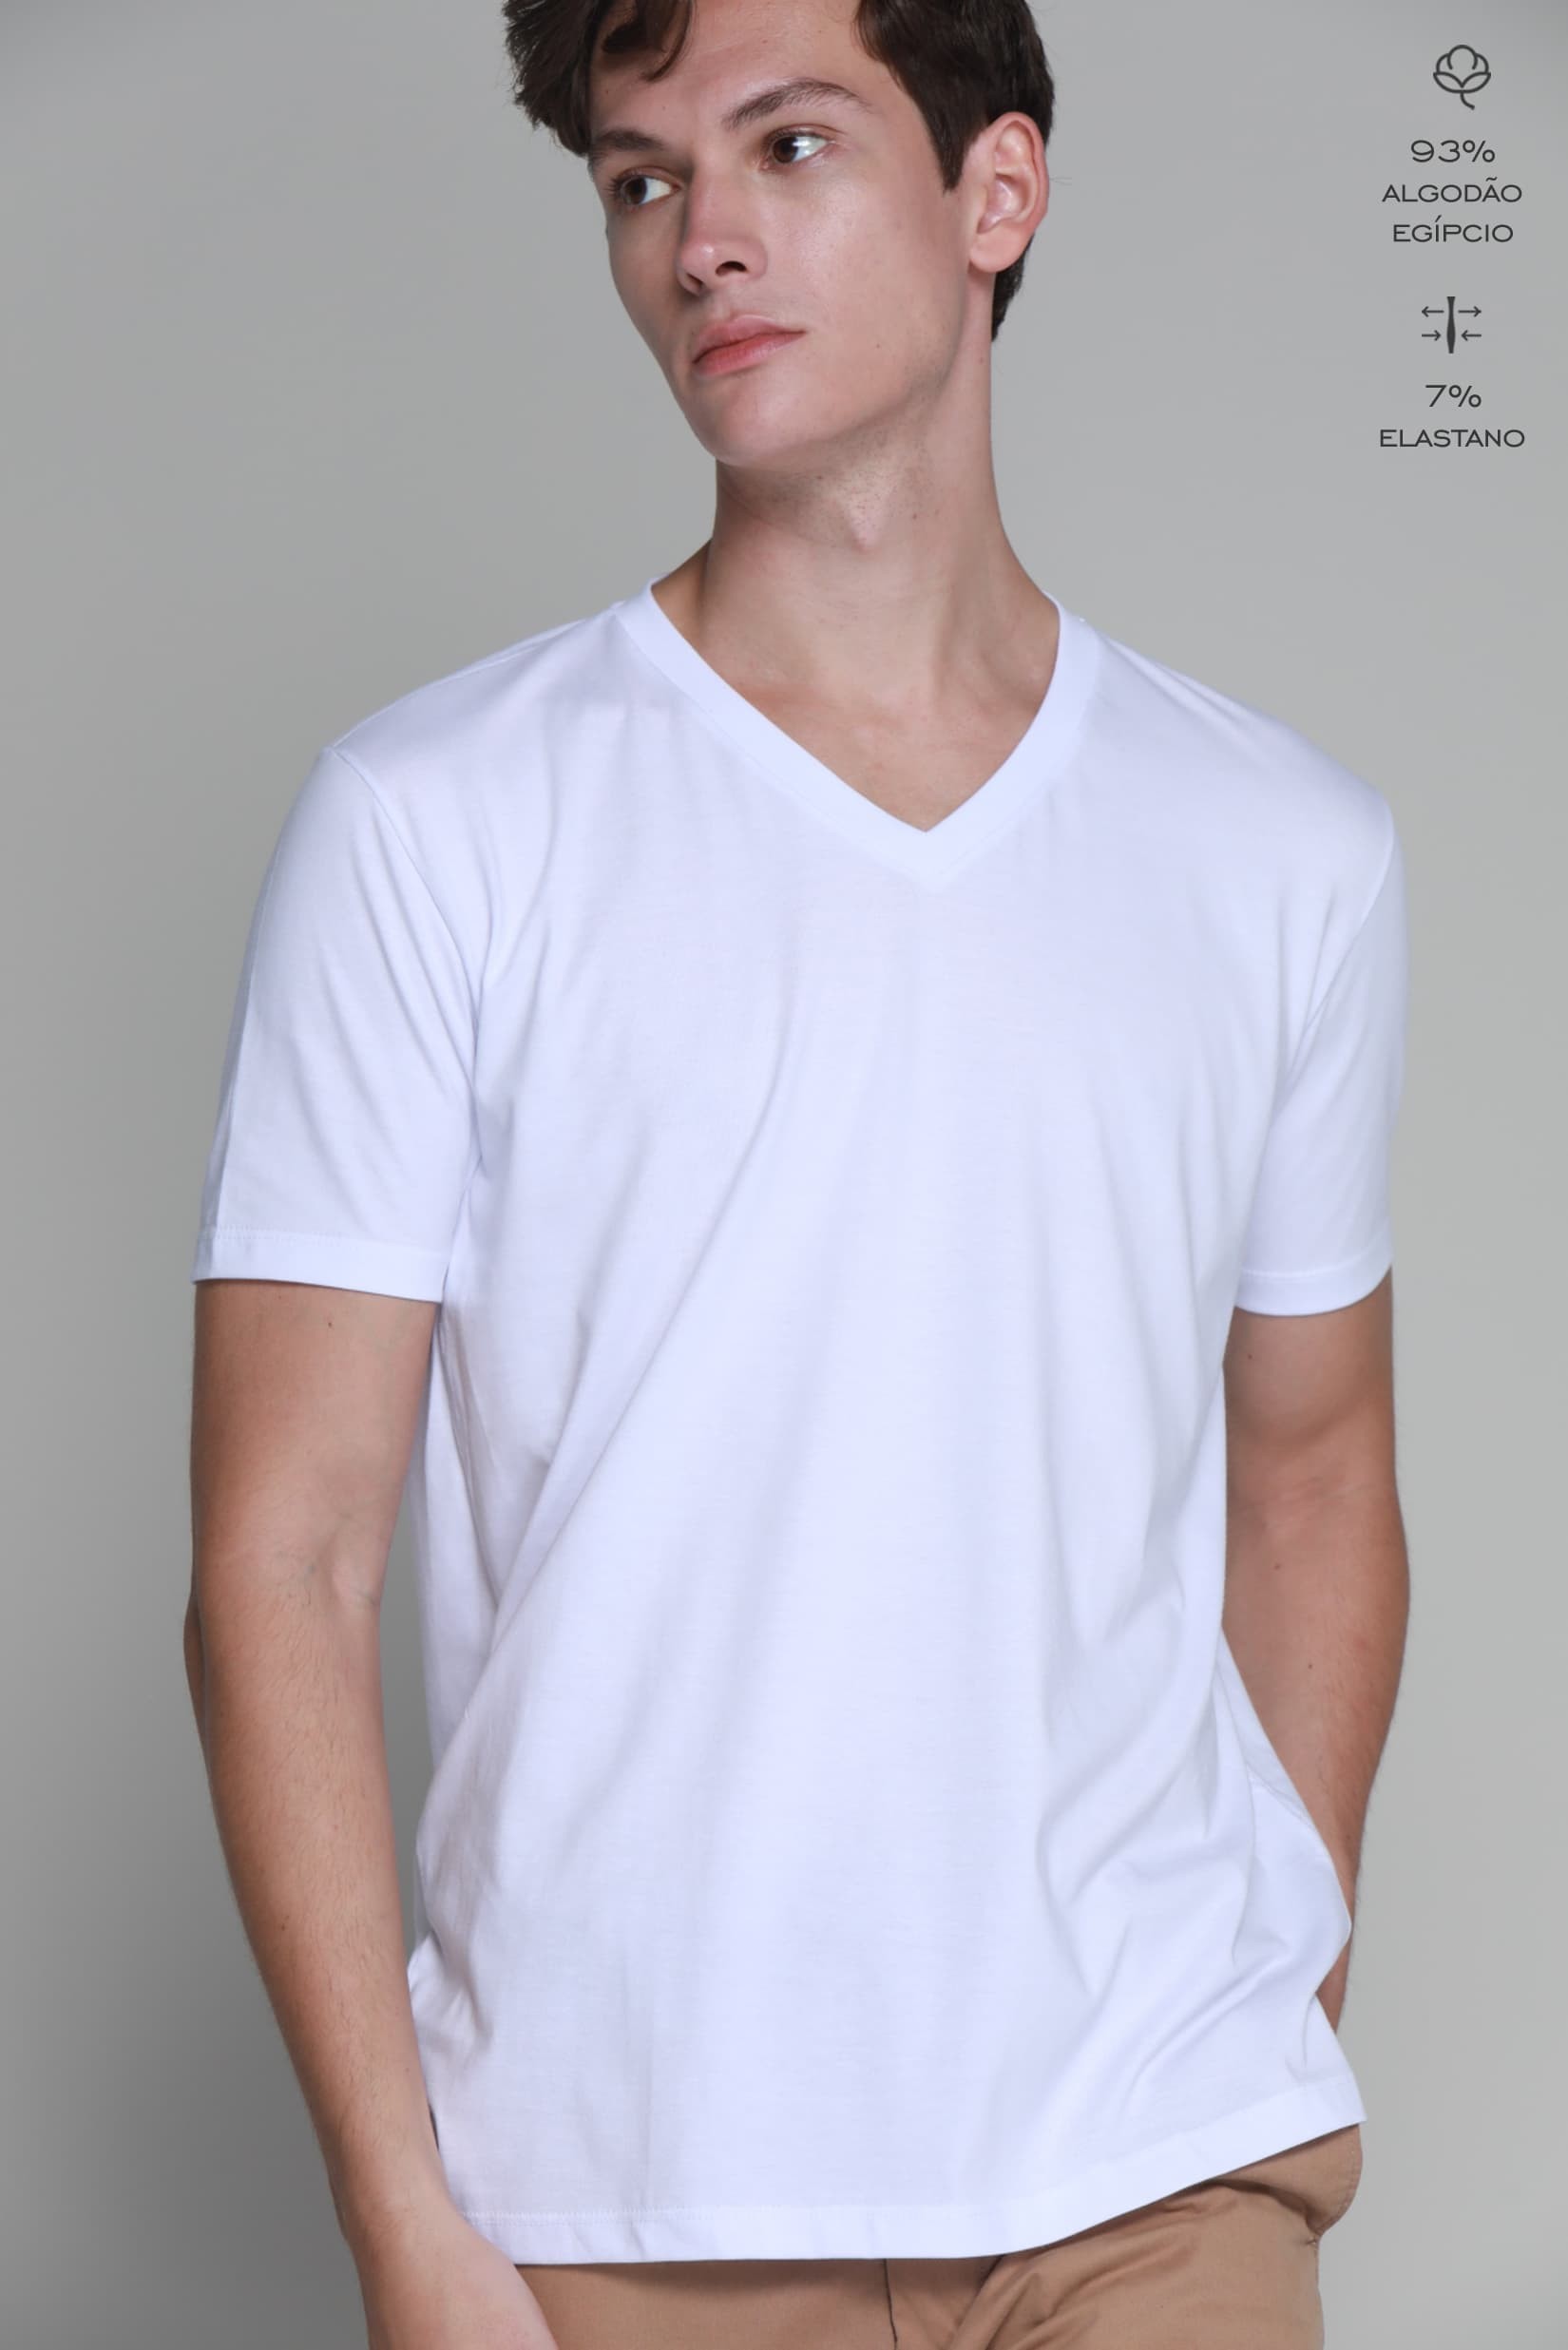 Camiseta Regata Masculina Branca Super Leve e Básica